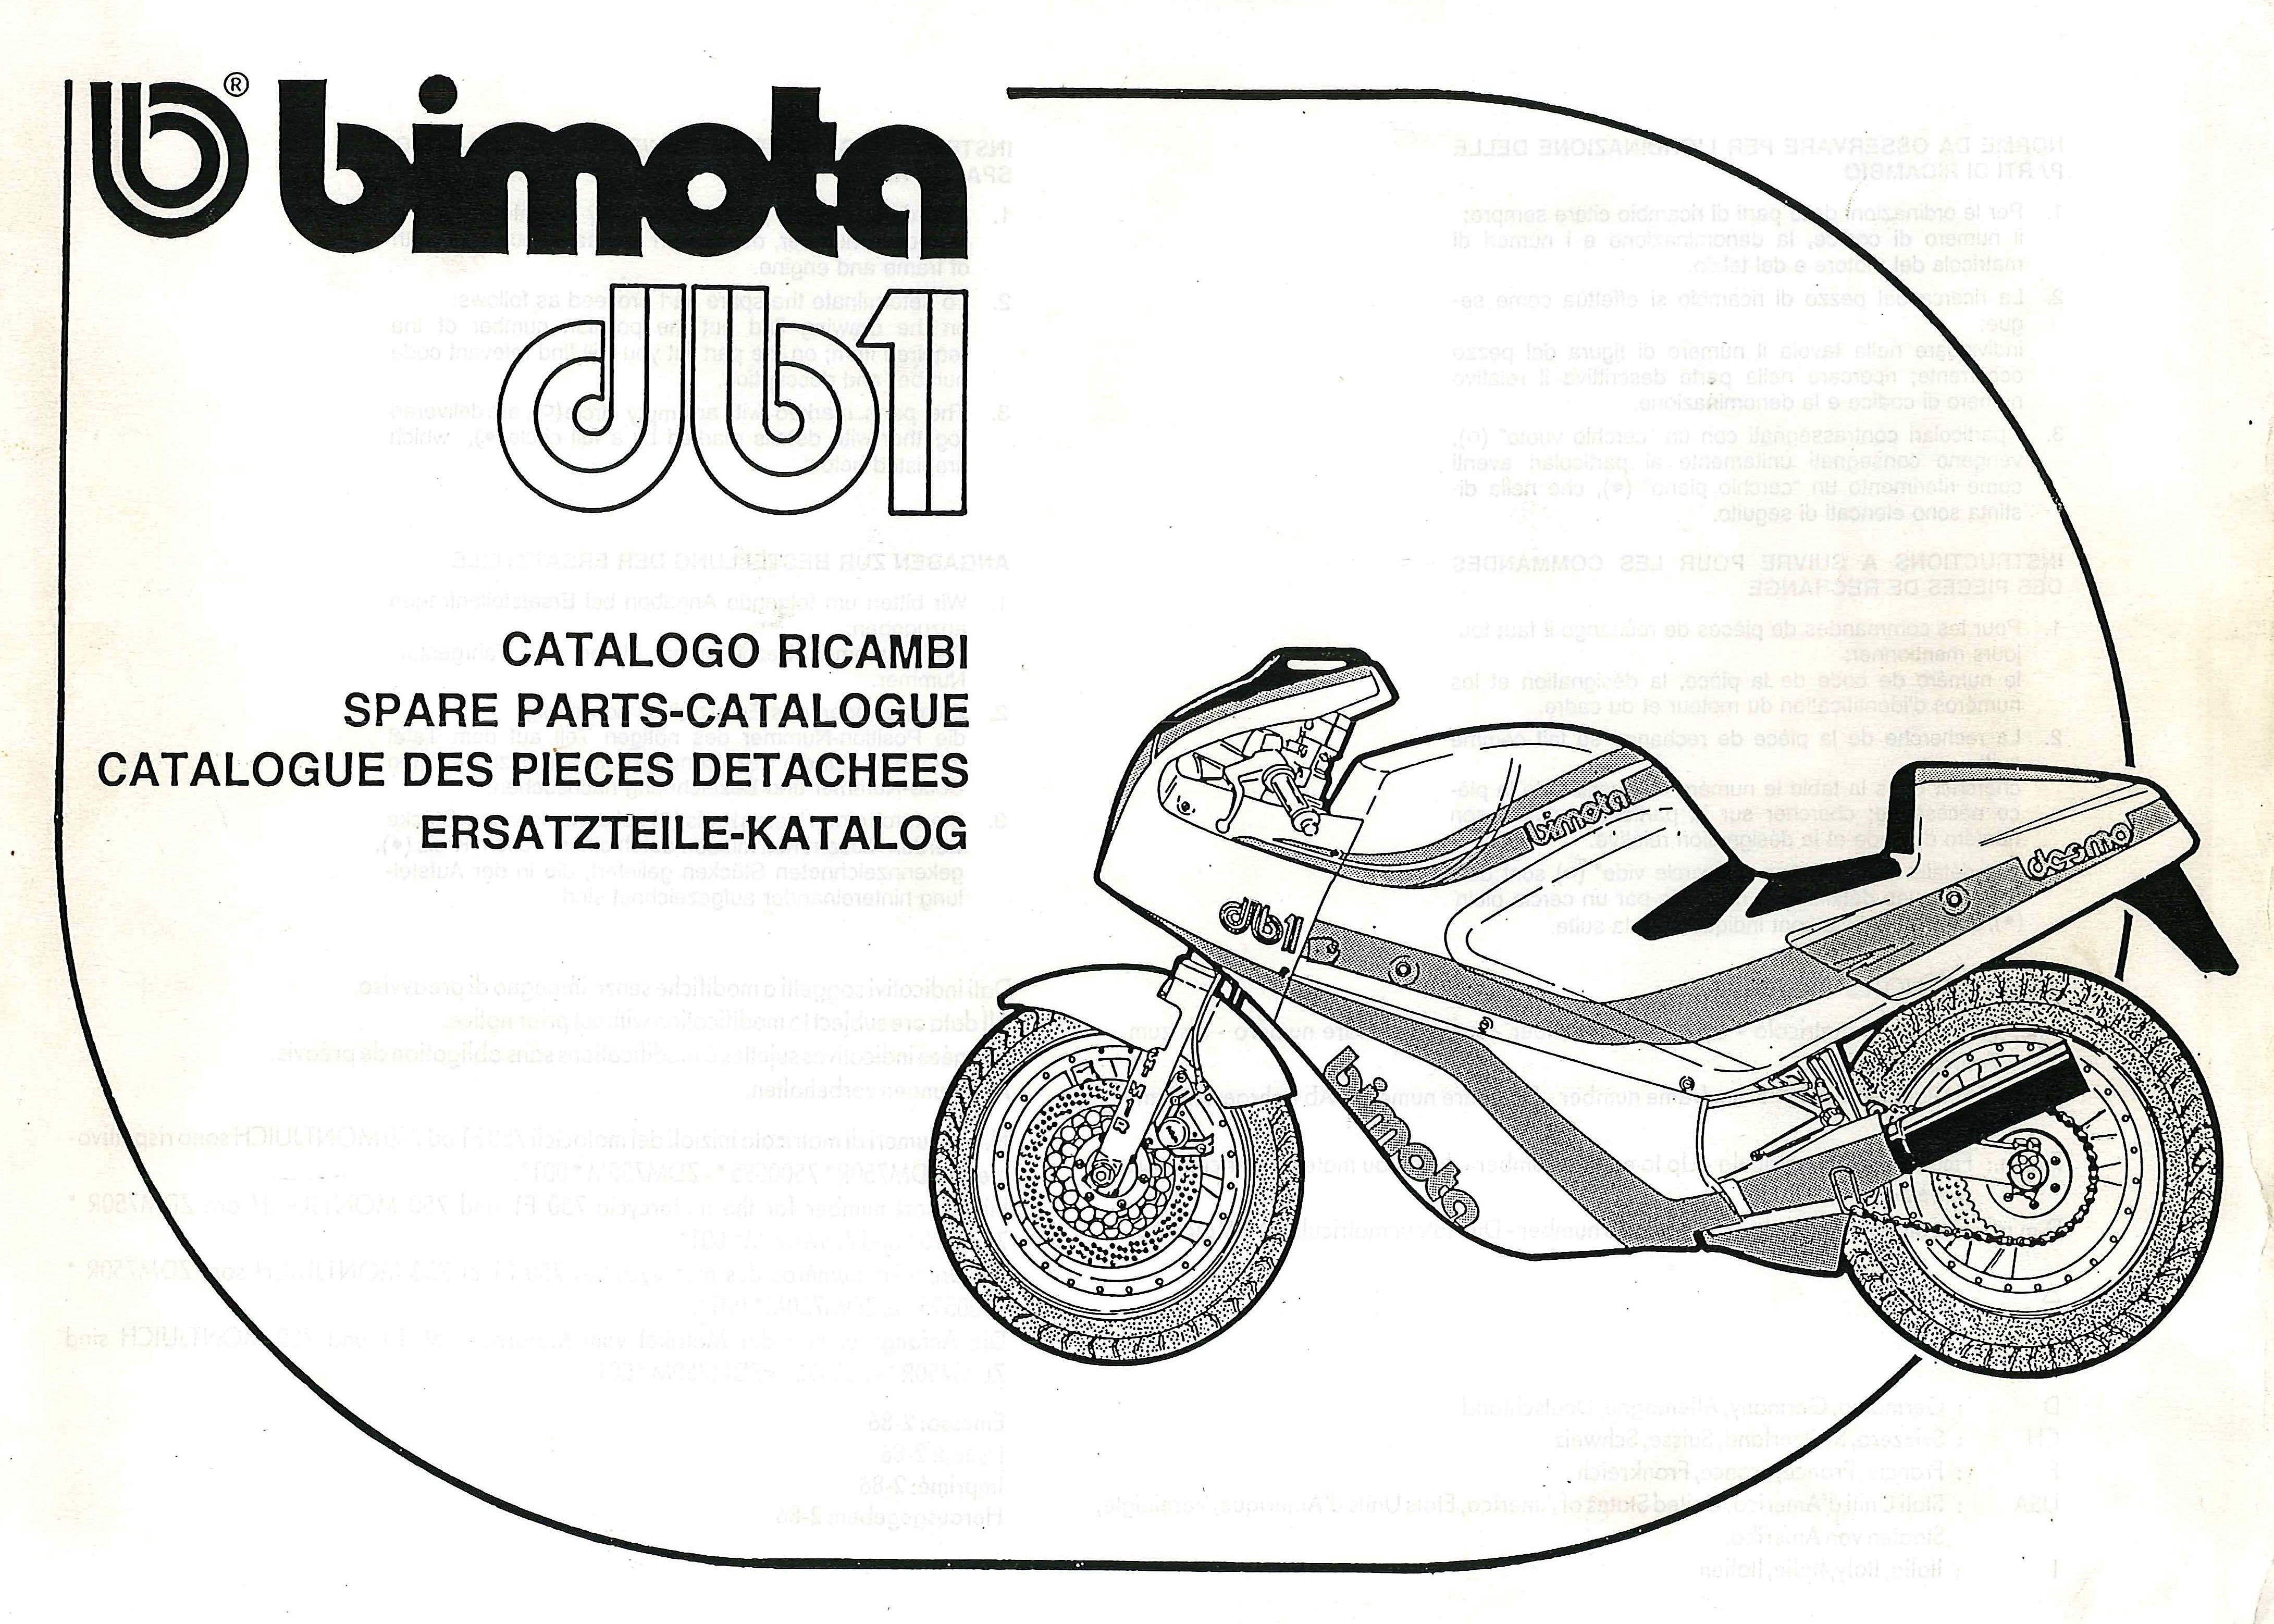 MANUALE RICAMBI BIMOTA DB1 750